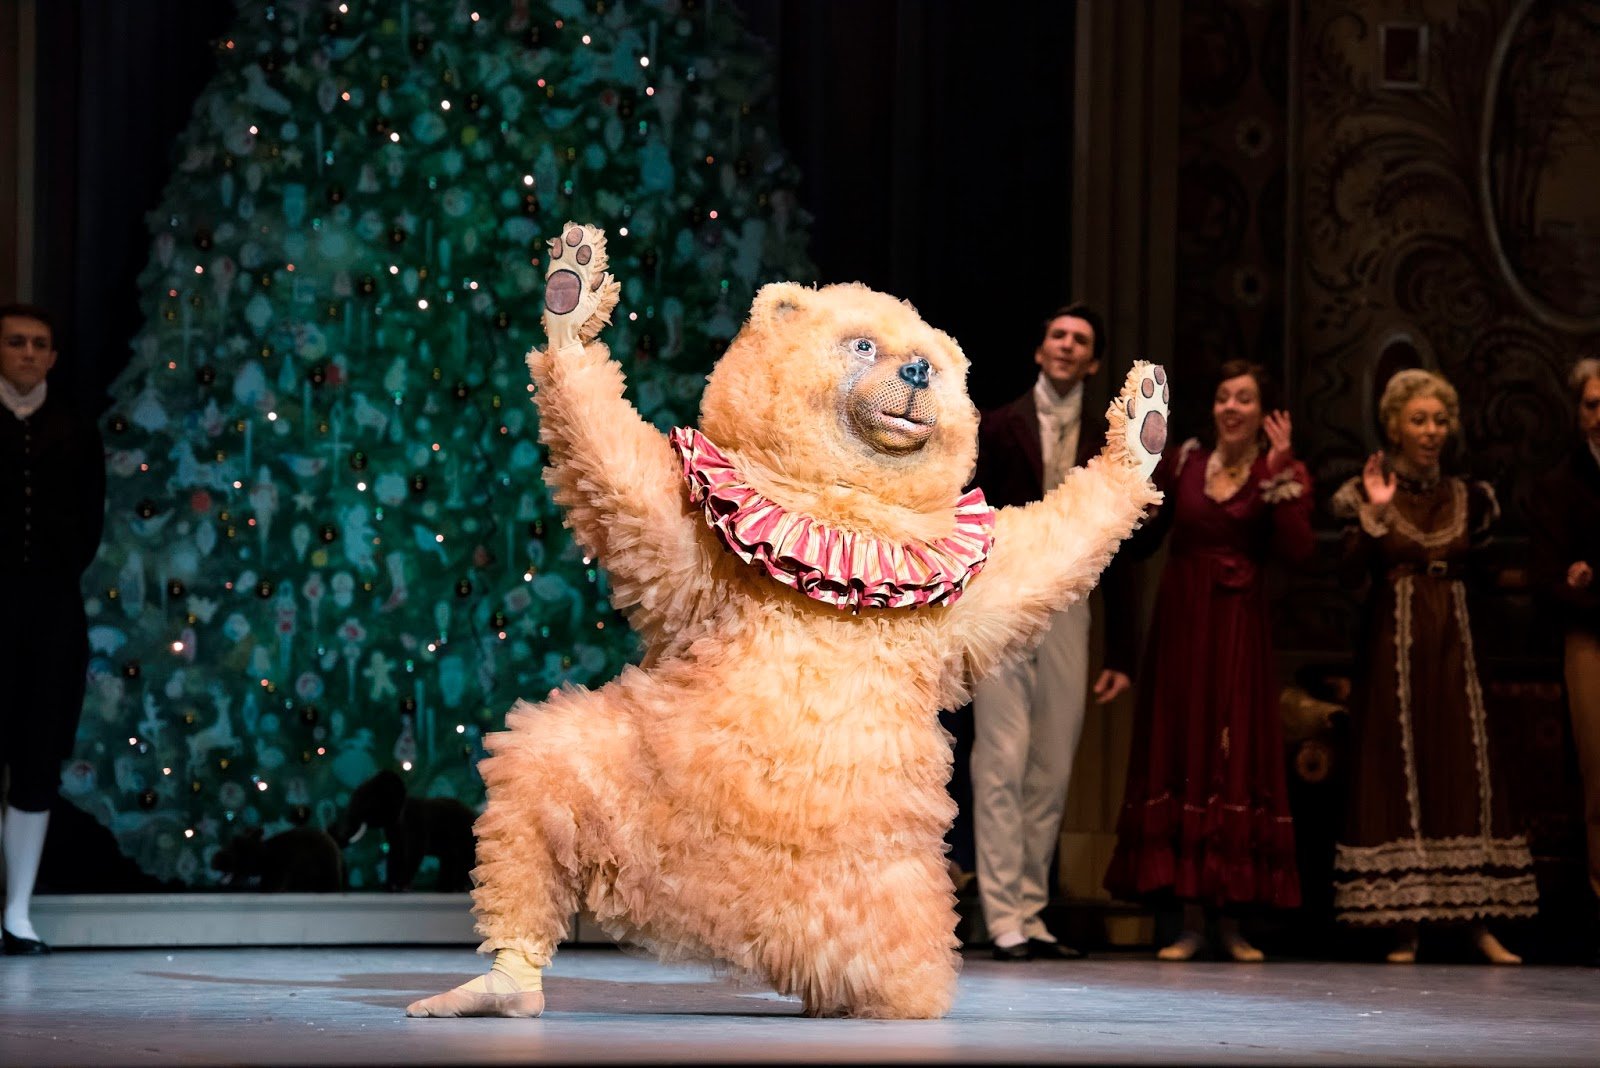 Dance bear com. Щелкунчик Бостон балет медведь. Бостонский балет Щелкунчик медведь. Бостонский театр балета Щелкунчик медведь. Танцующий медведь.